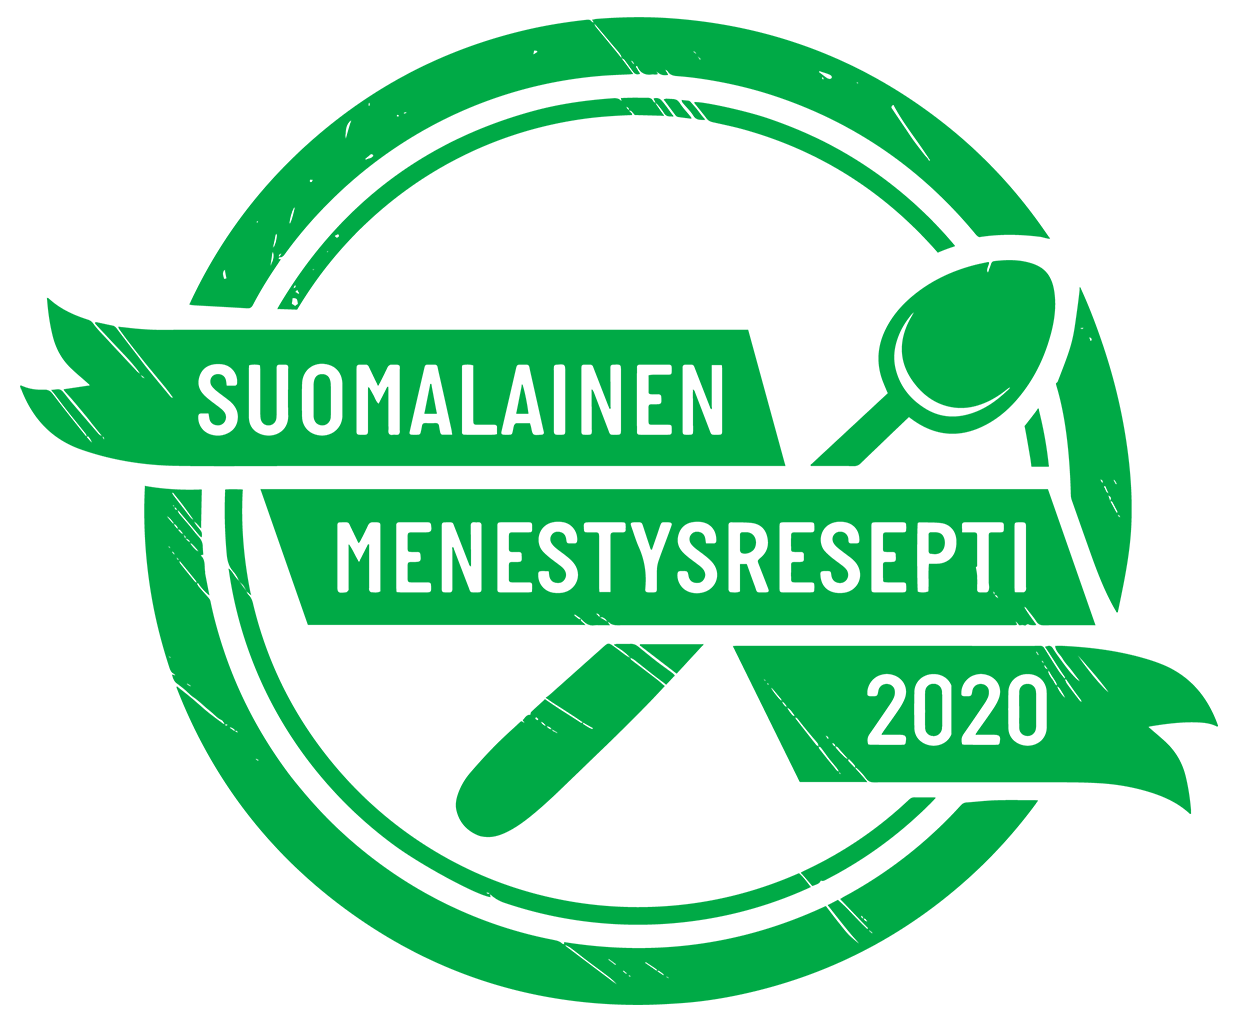 Suomalainen menestysresepti 2020 logo green rgb-1